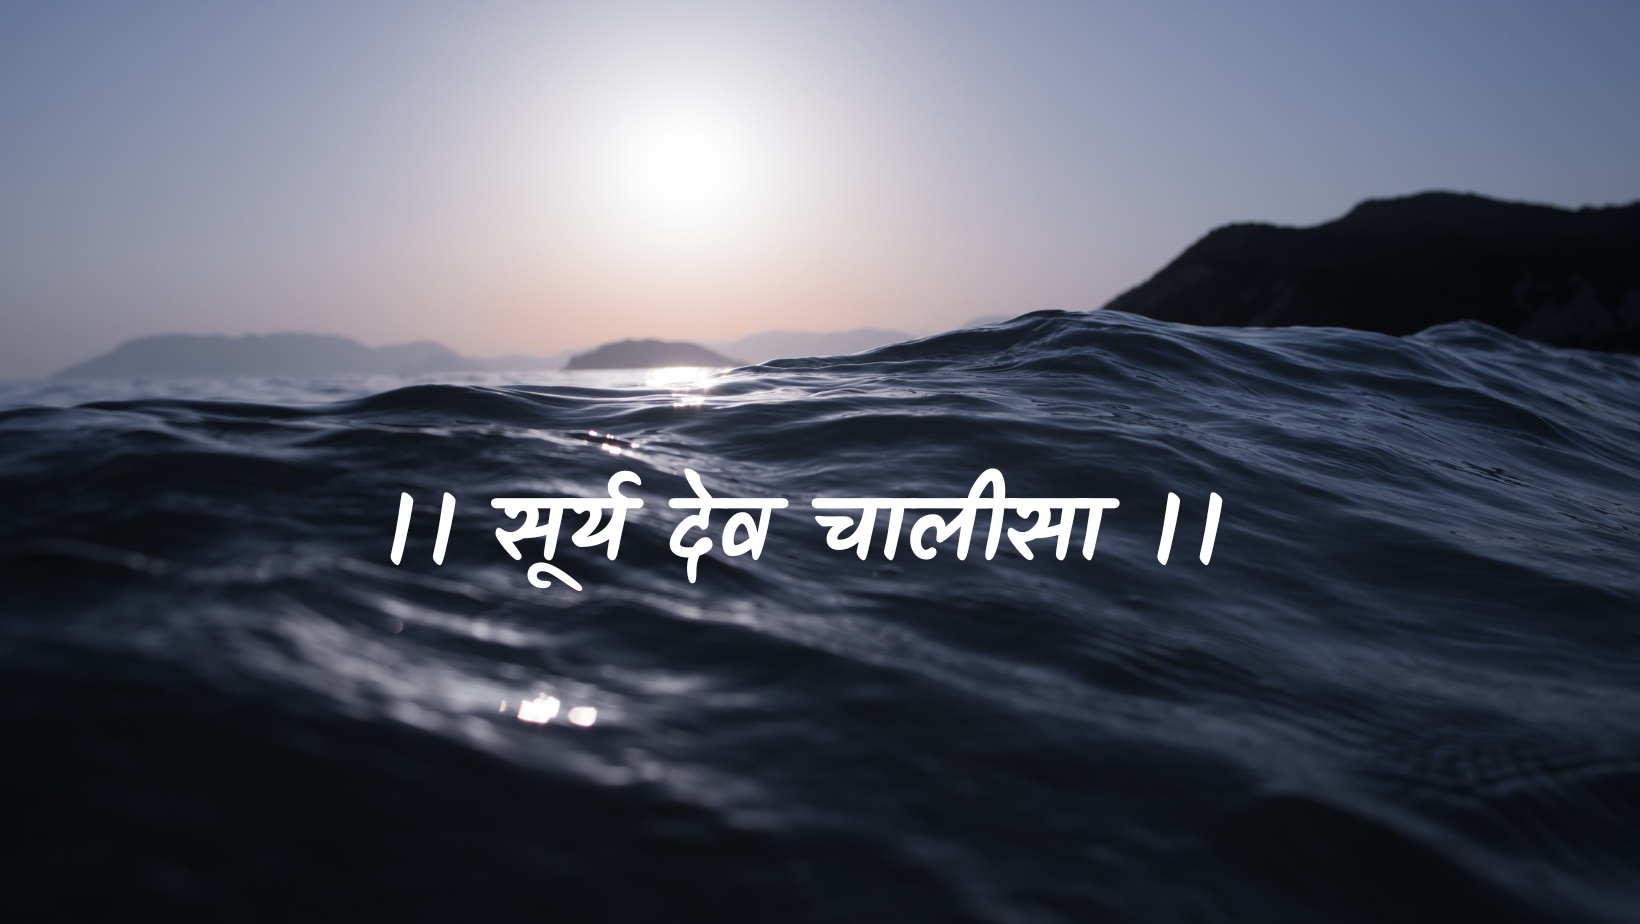 सूर्य देव चालीसा | Surya dev chaleesa by विकास